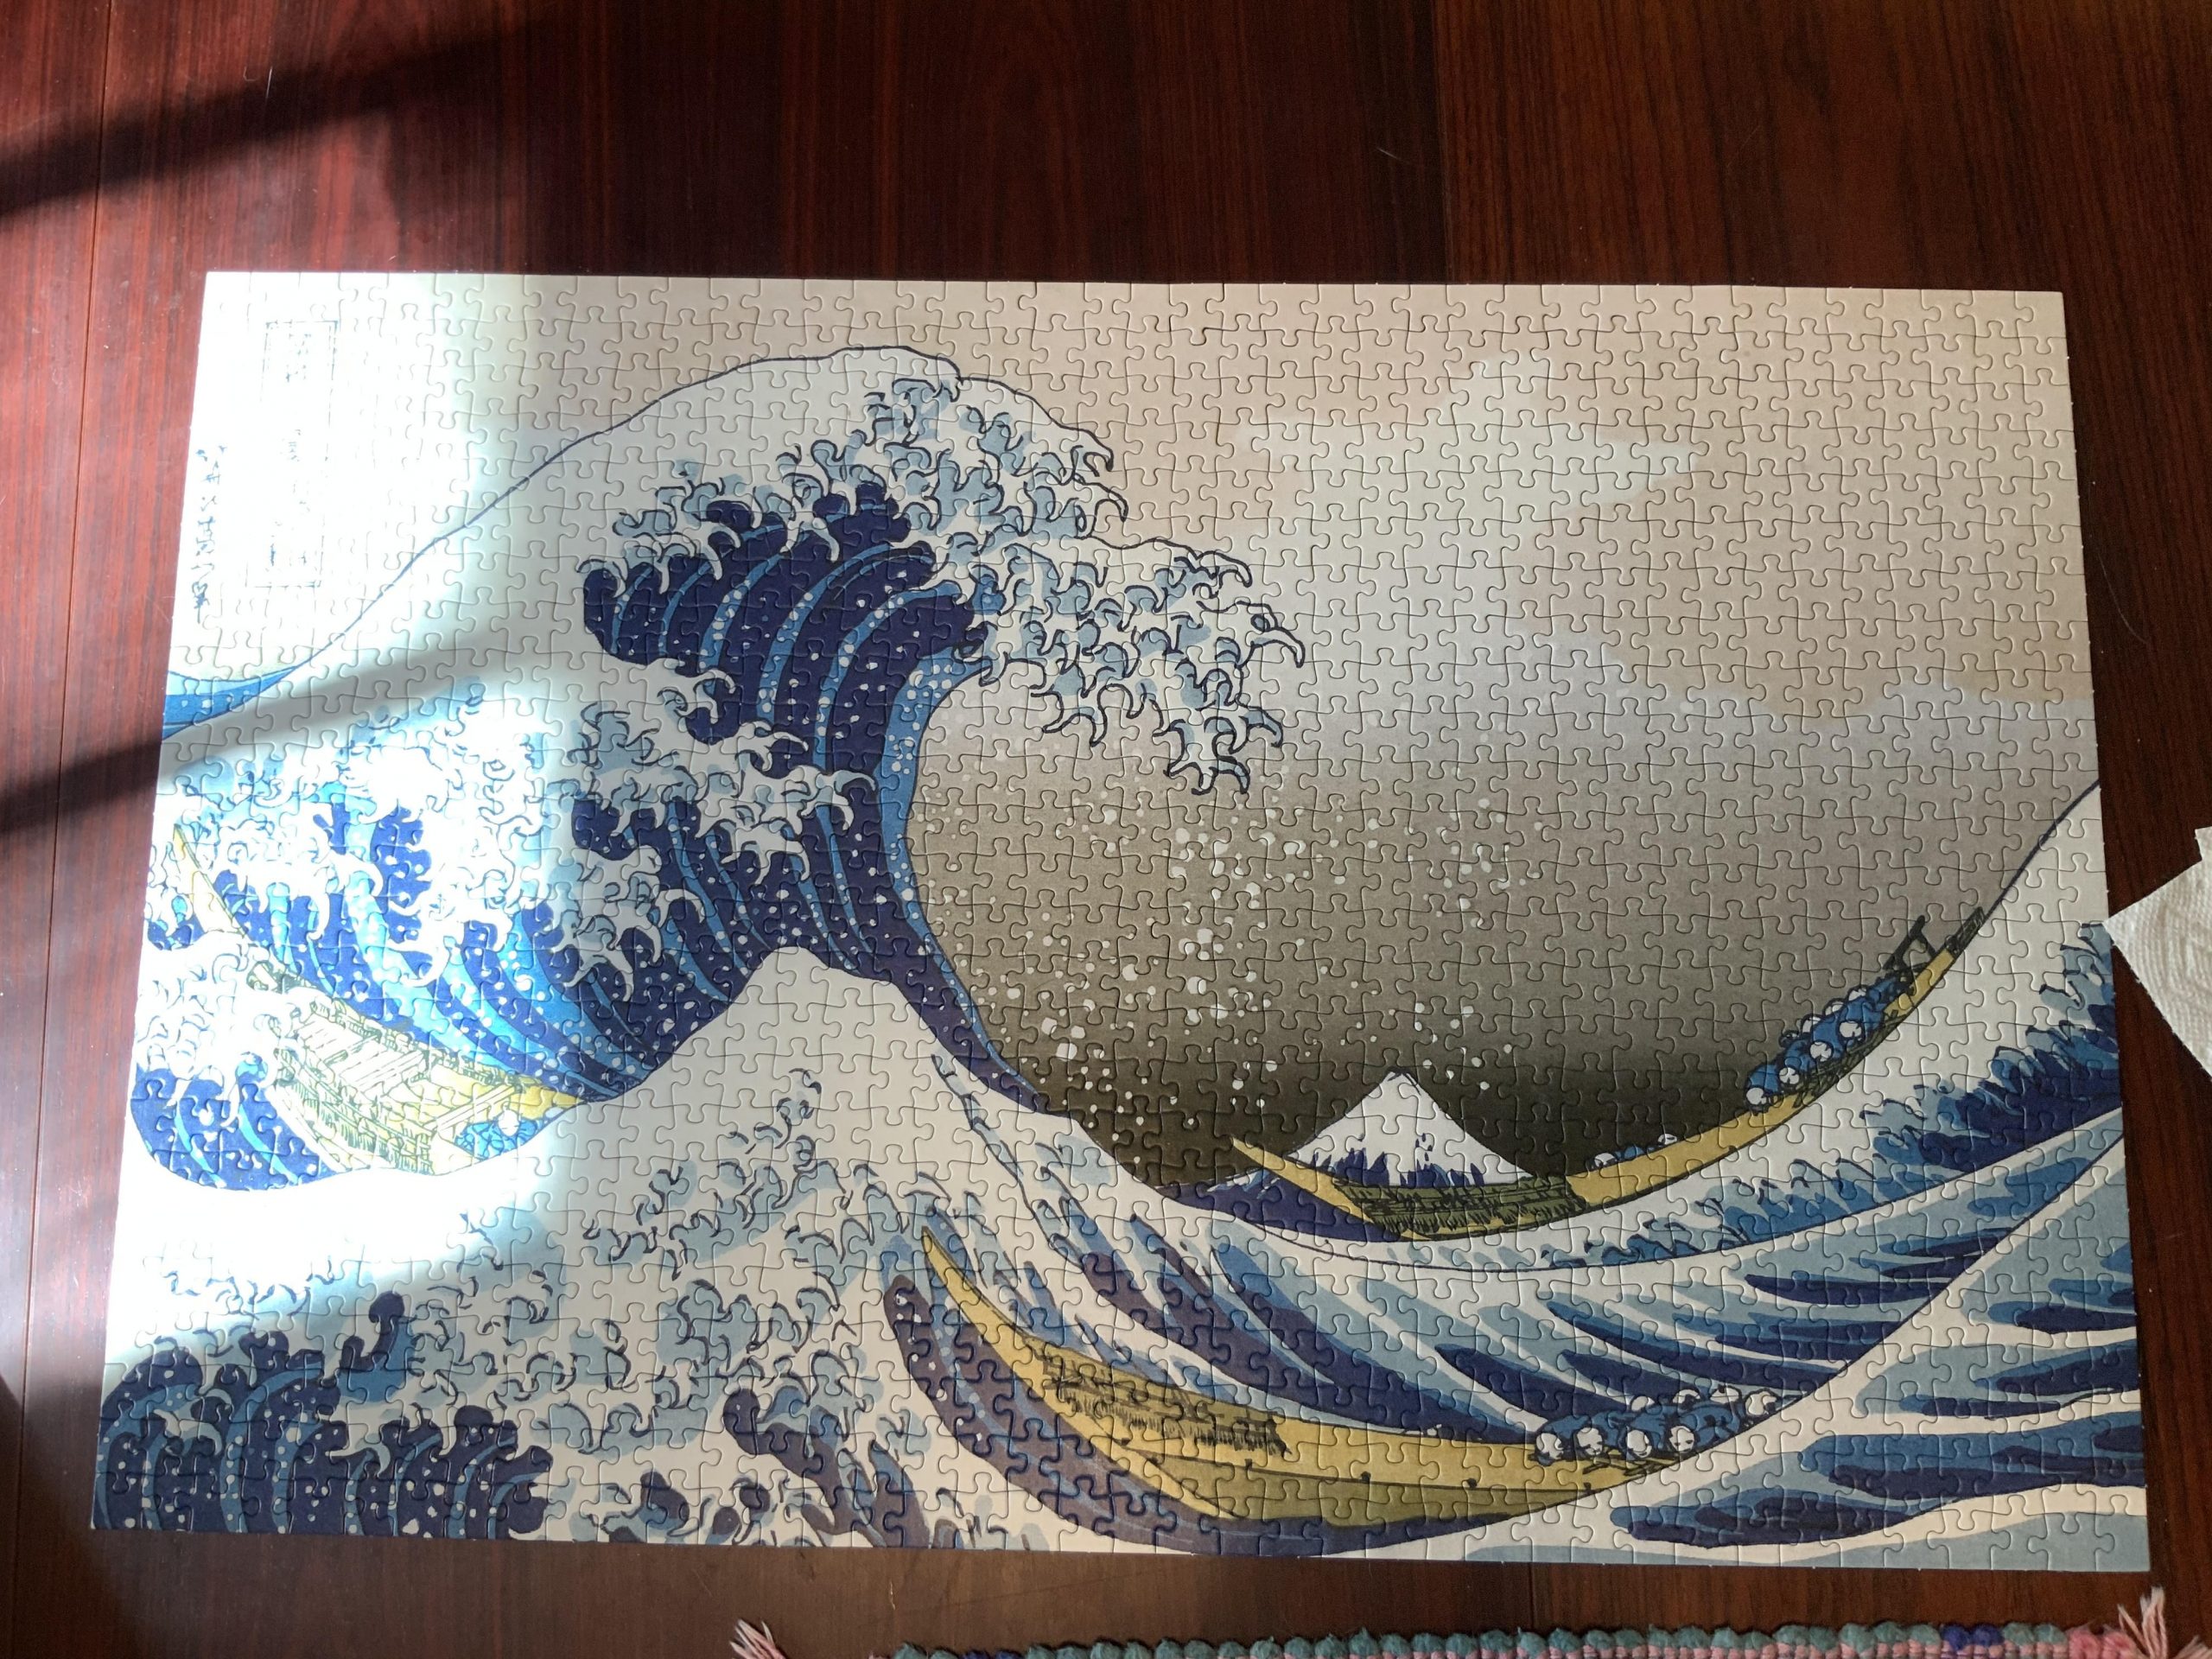 “The Great Wave off Kanagawa” by Katsushika Hokusai puzzle